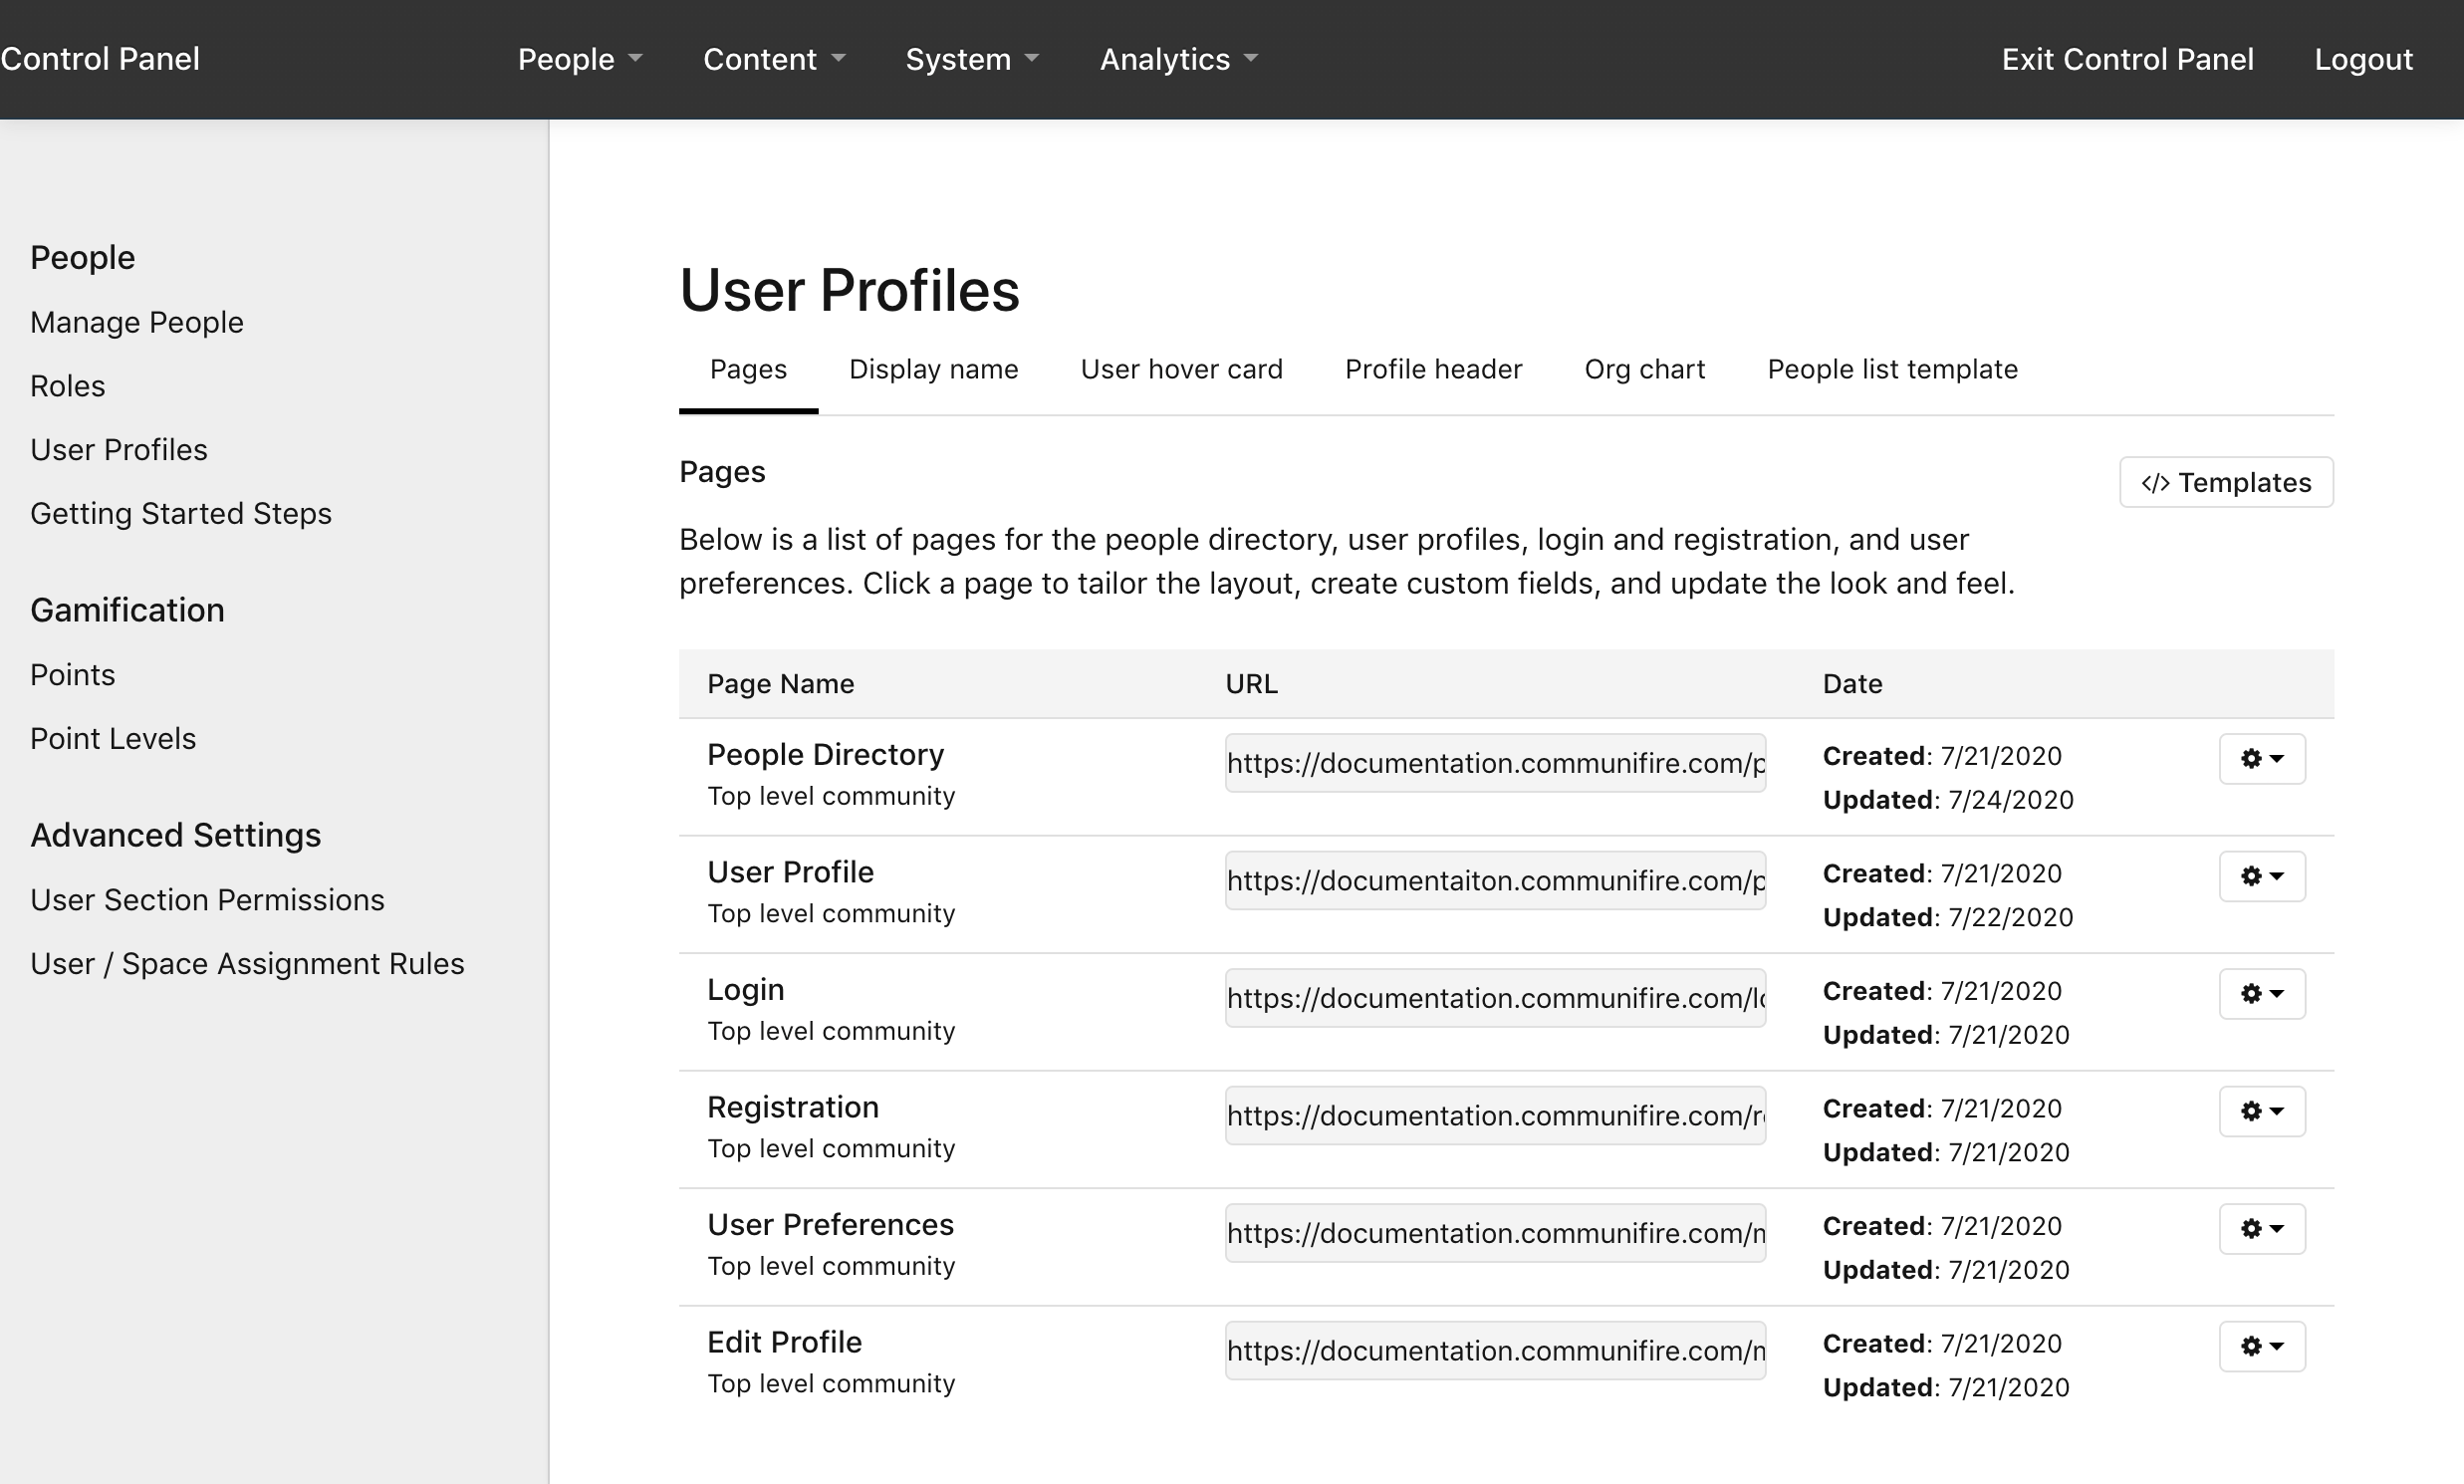 Control Panel > People > User Profiles